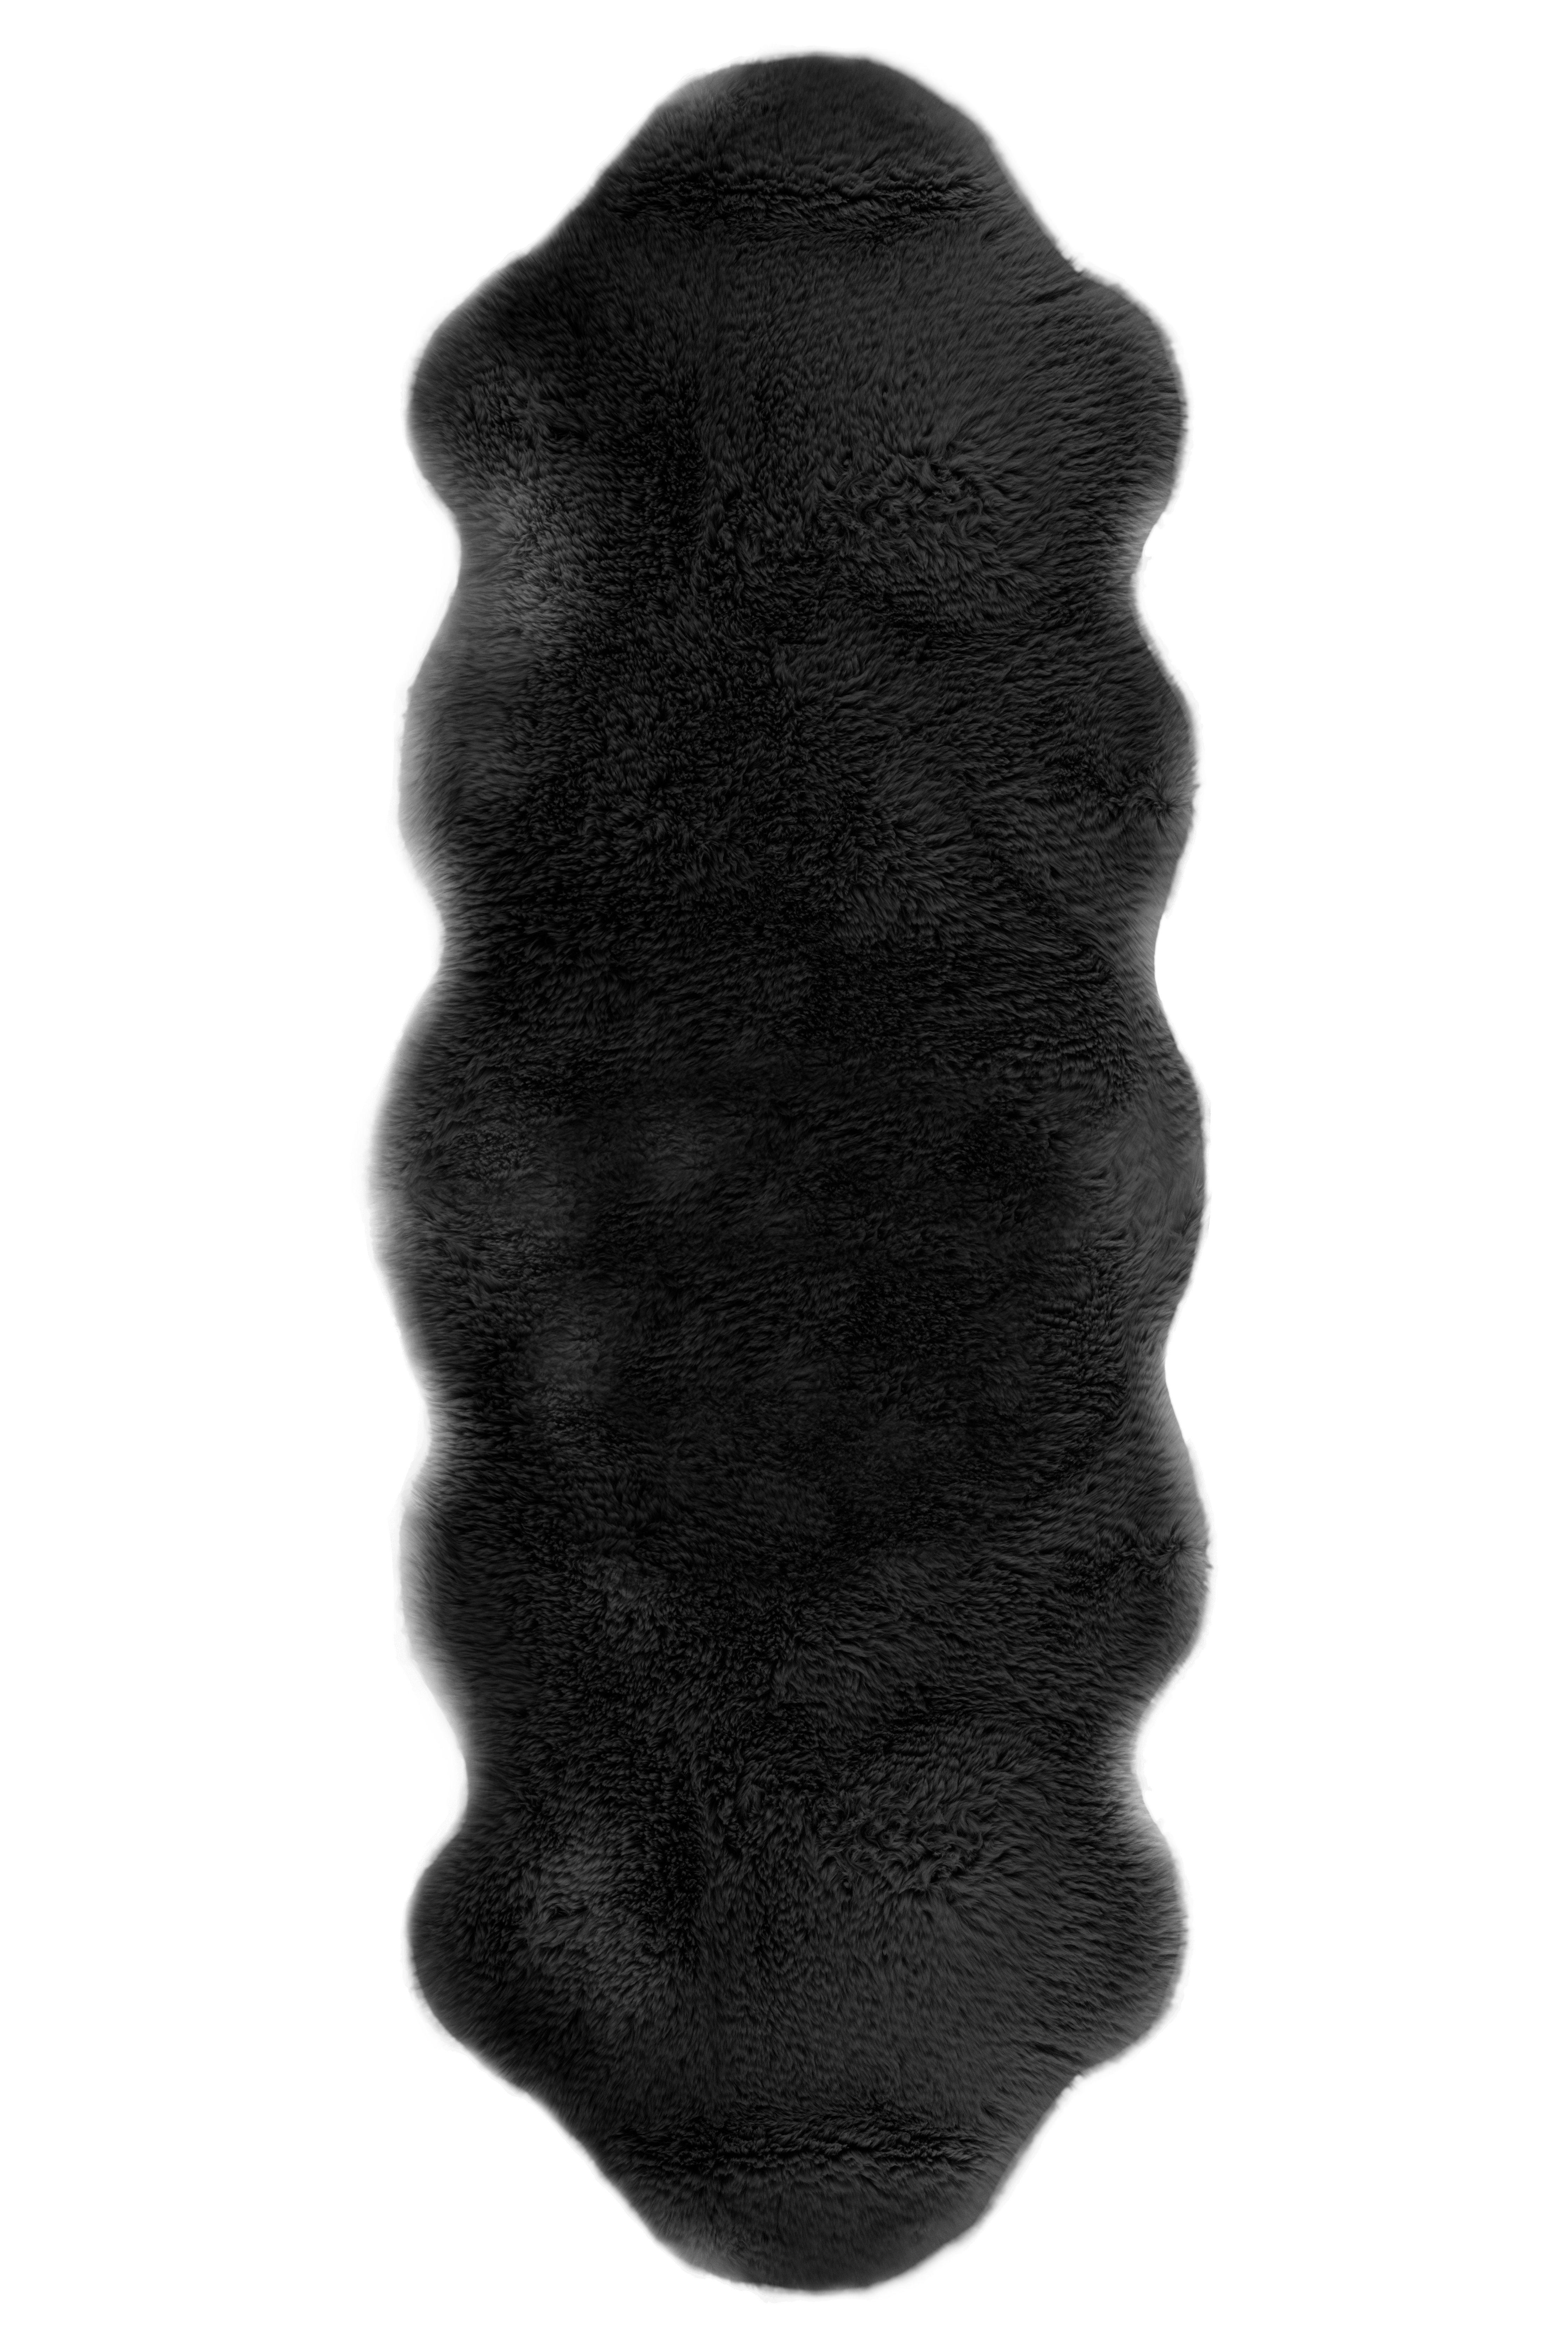 Sheepskin LAMBSKIN - 60x180cm, black